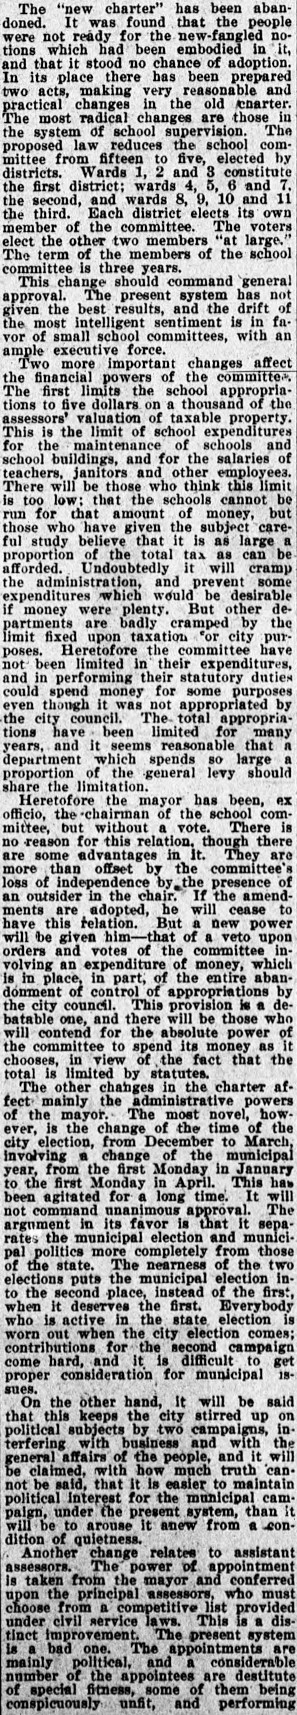 May 25, 1907 Cambridge Chronicle - part 1